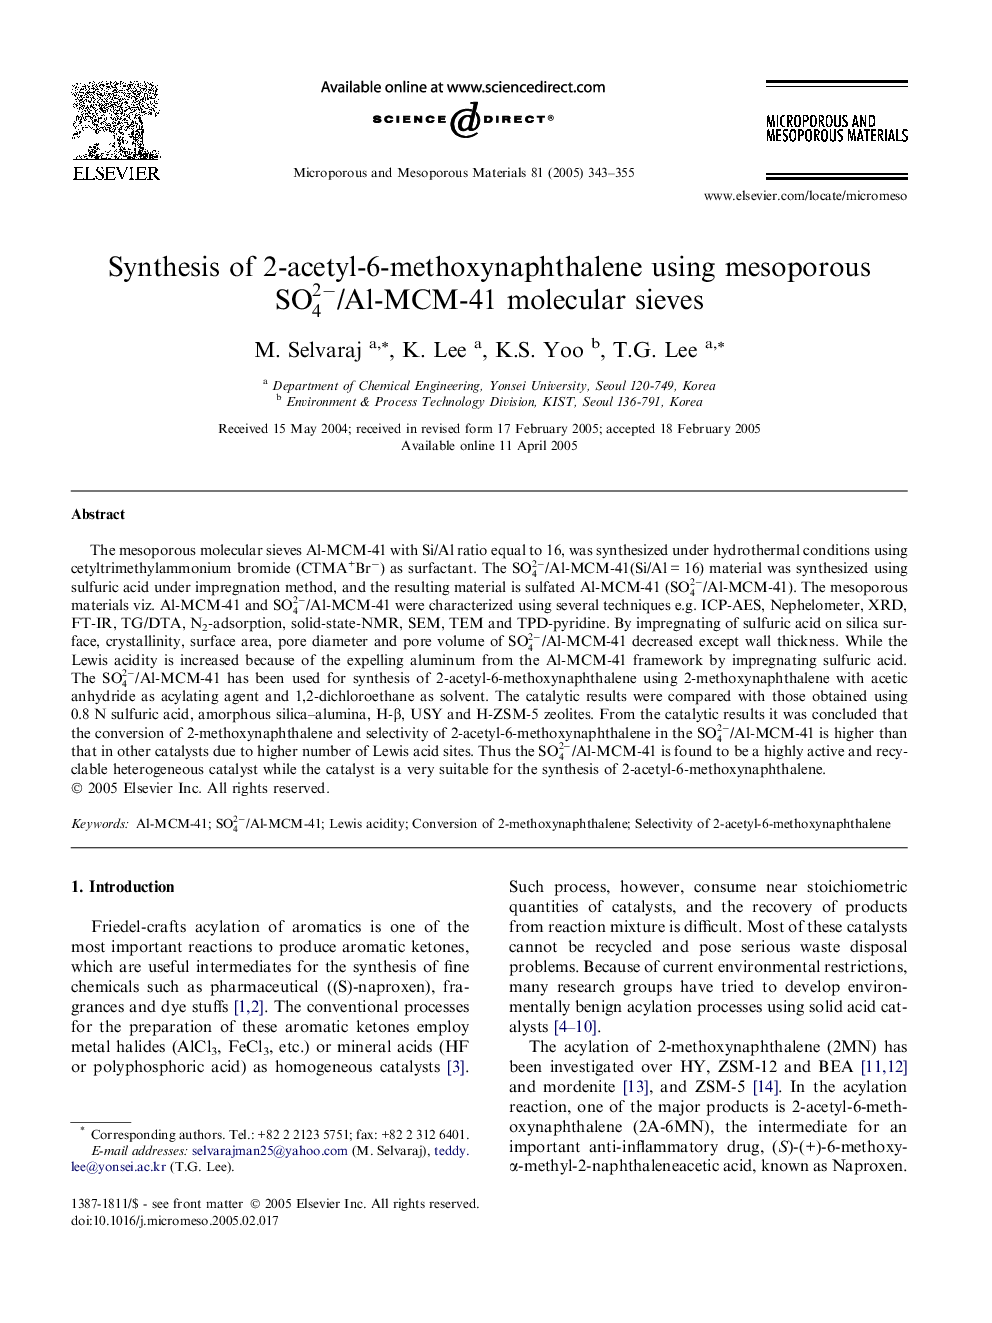 Synthesis of 2-acetyl-6-methoxynaphthalene using mesoporous SO42-/Al-MCM-41 molecular sieves